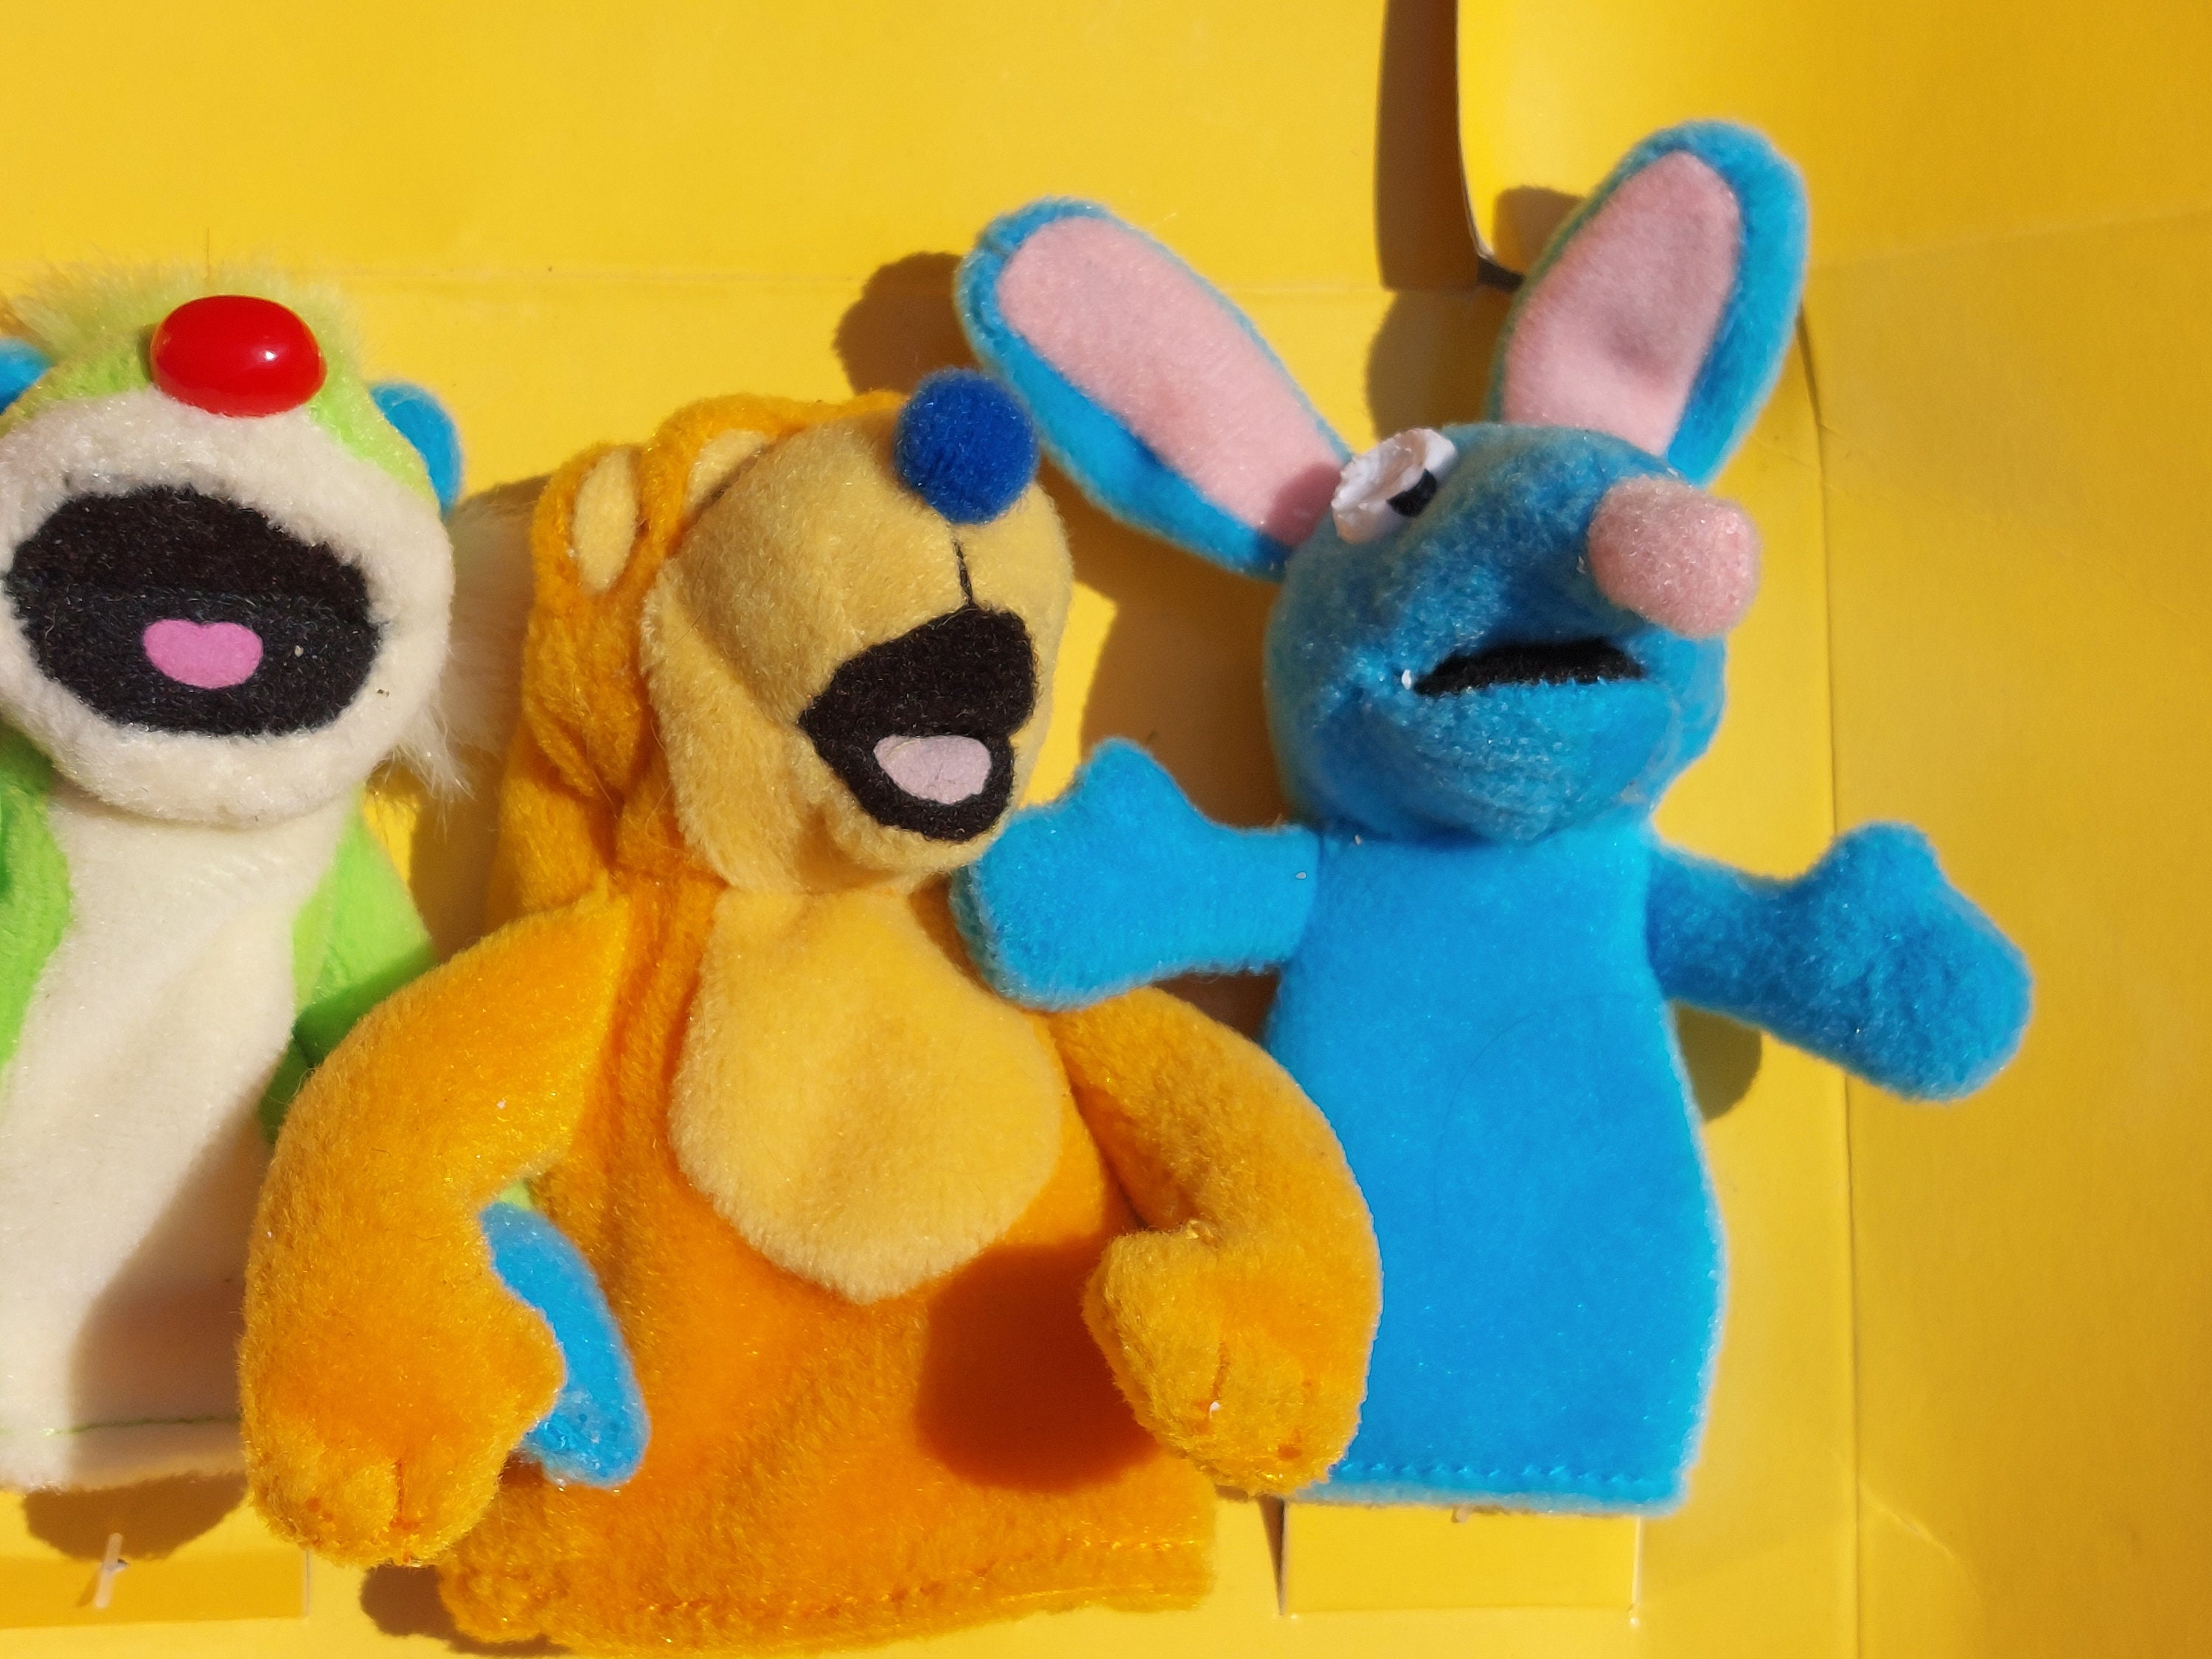 BINYOU 20cm Mini Bear Pendant Stuffed Animals Party Gift Plush